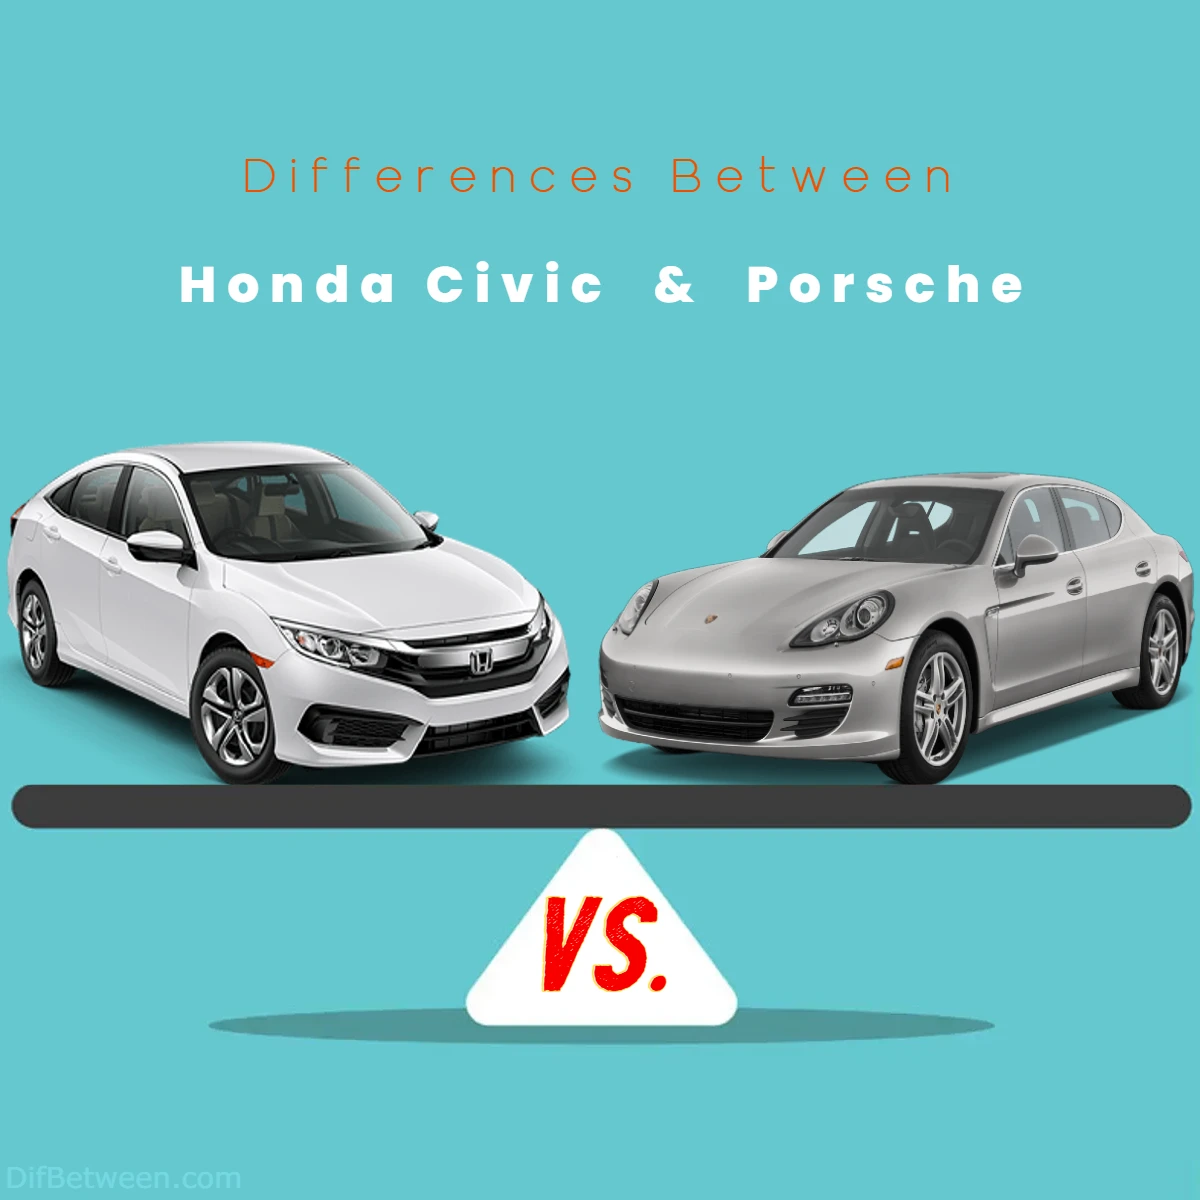 Differences Between Honda Civic vs Porsche